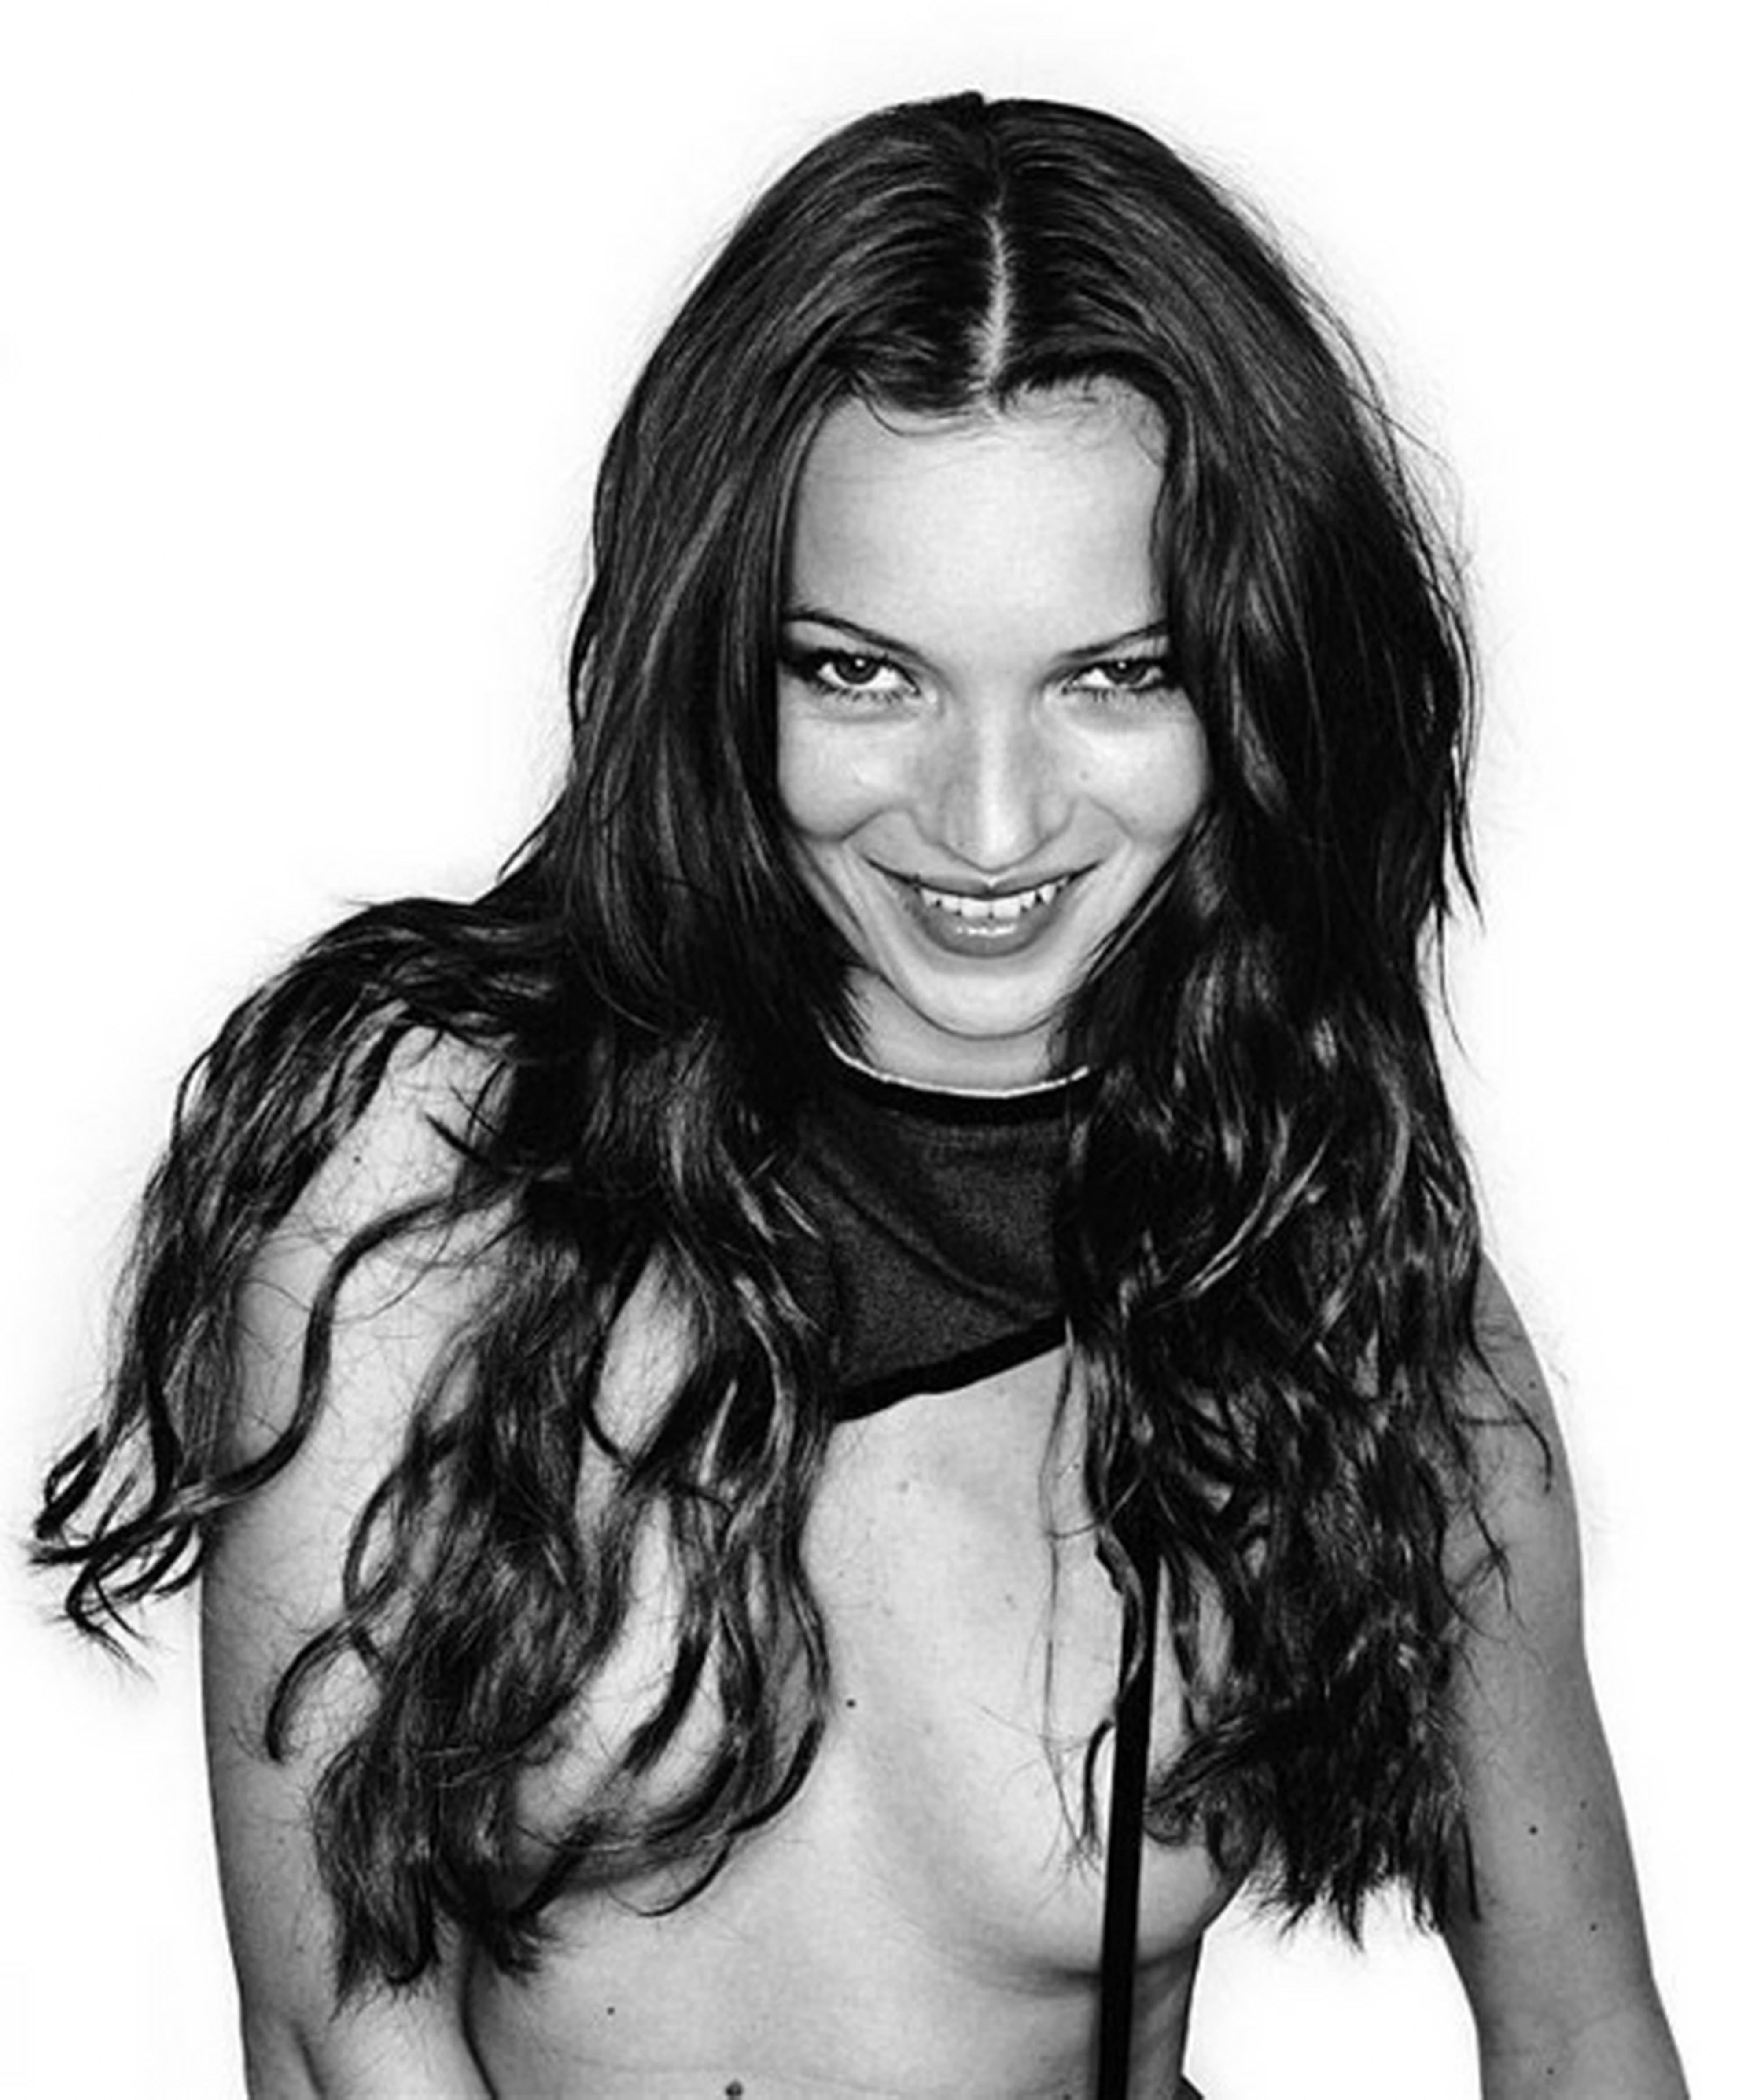 Rankin Portrait Photograph - Cheeky Kate - nude portrait of supermodel Kate Moss, fine art photography, 1999